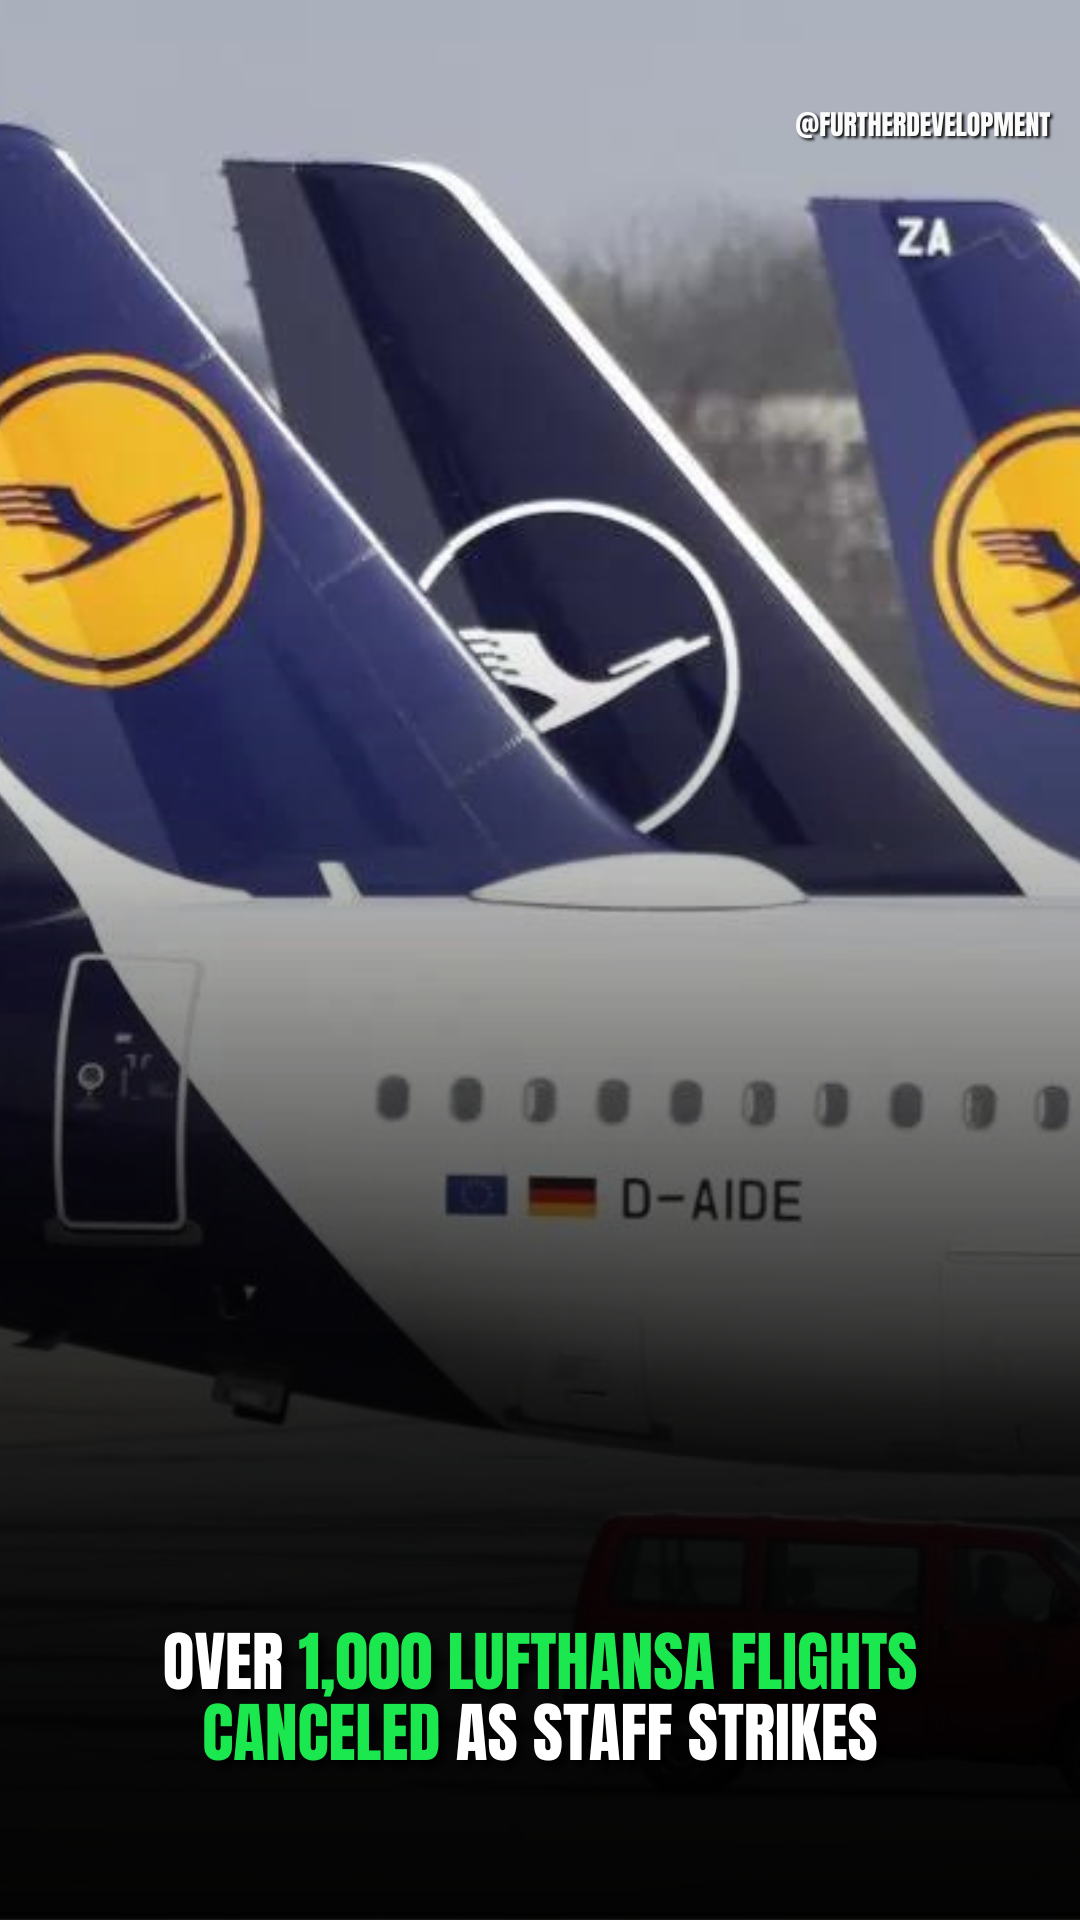 Over 1,000 Lufthansa flights canceled as staff strikes